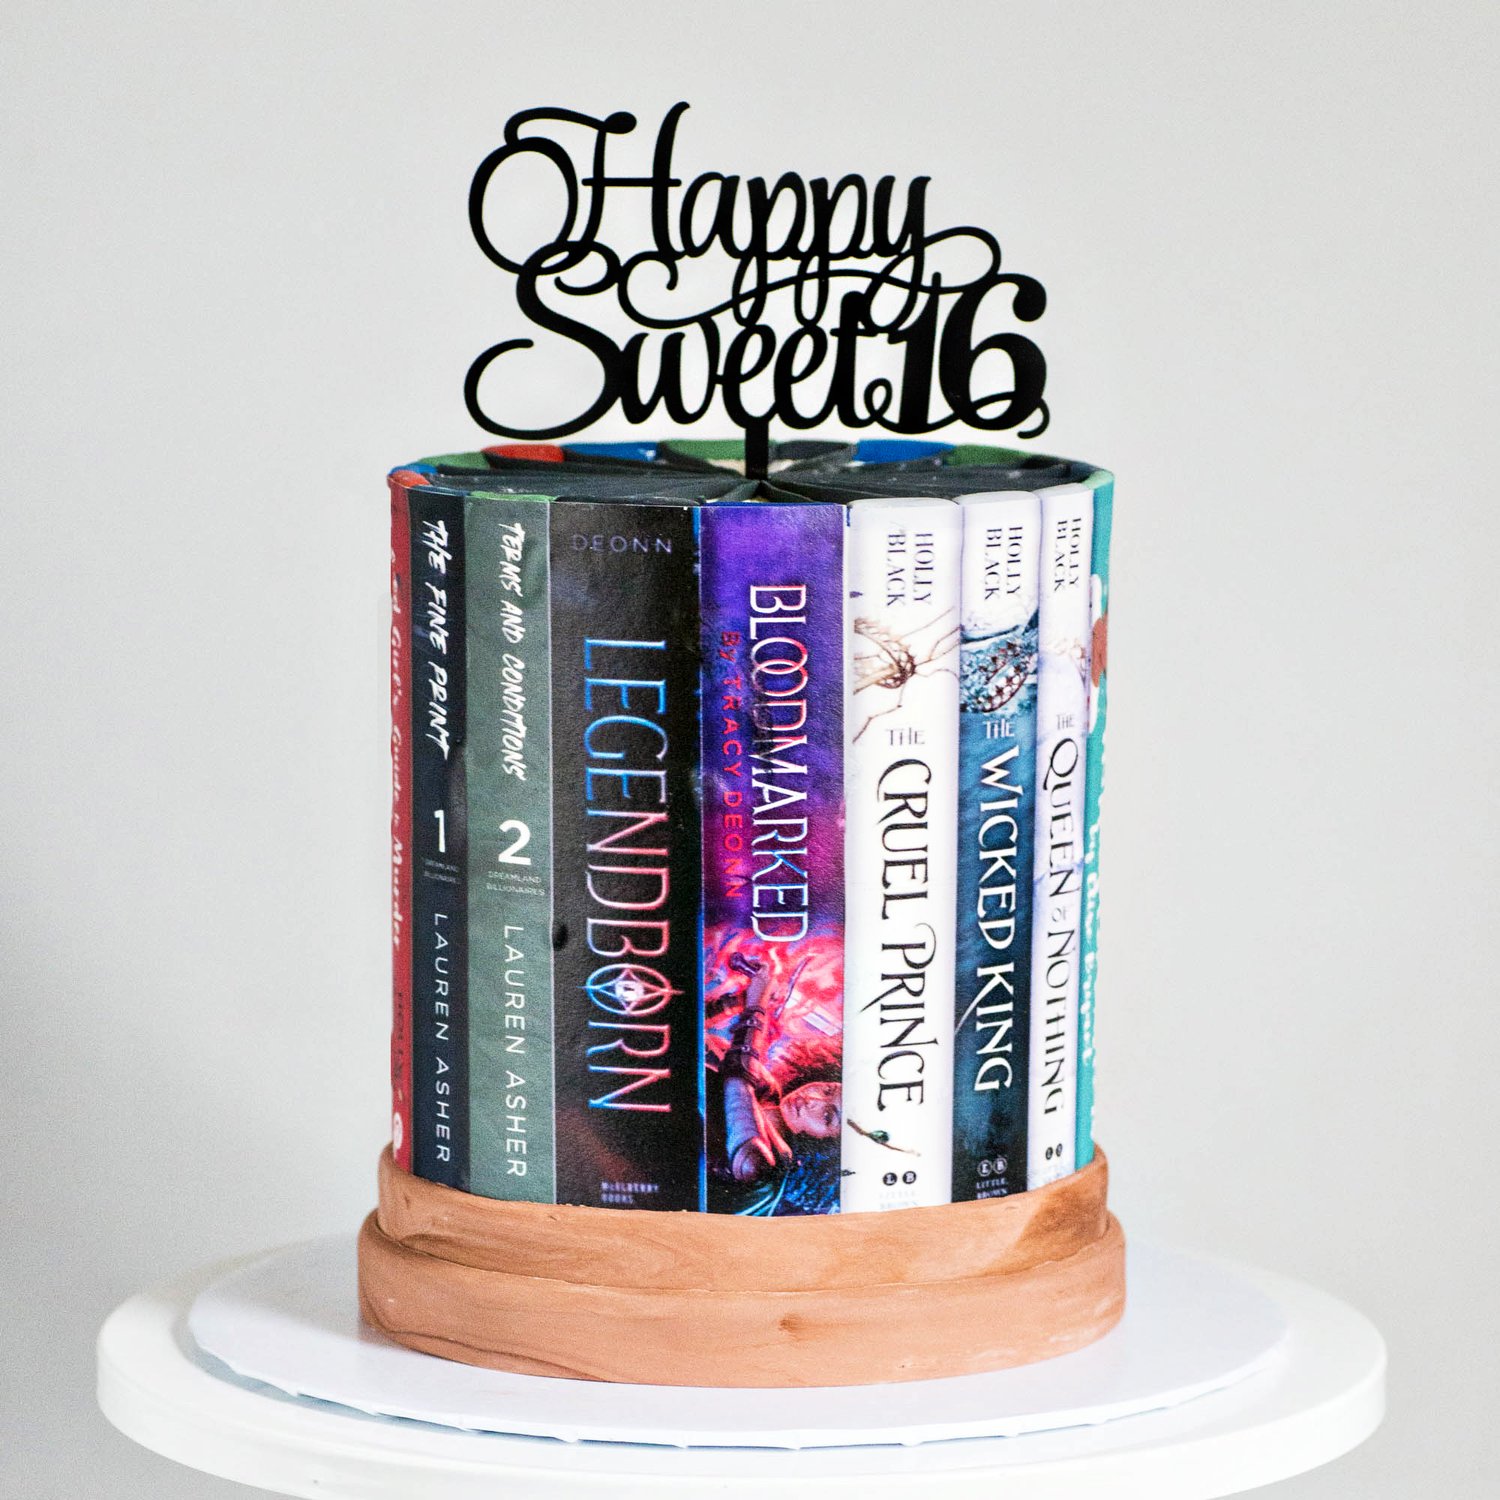 Sweet 16 Book cake